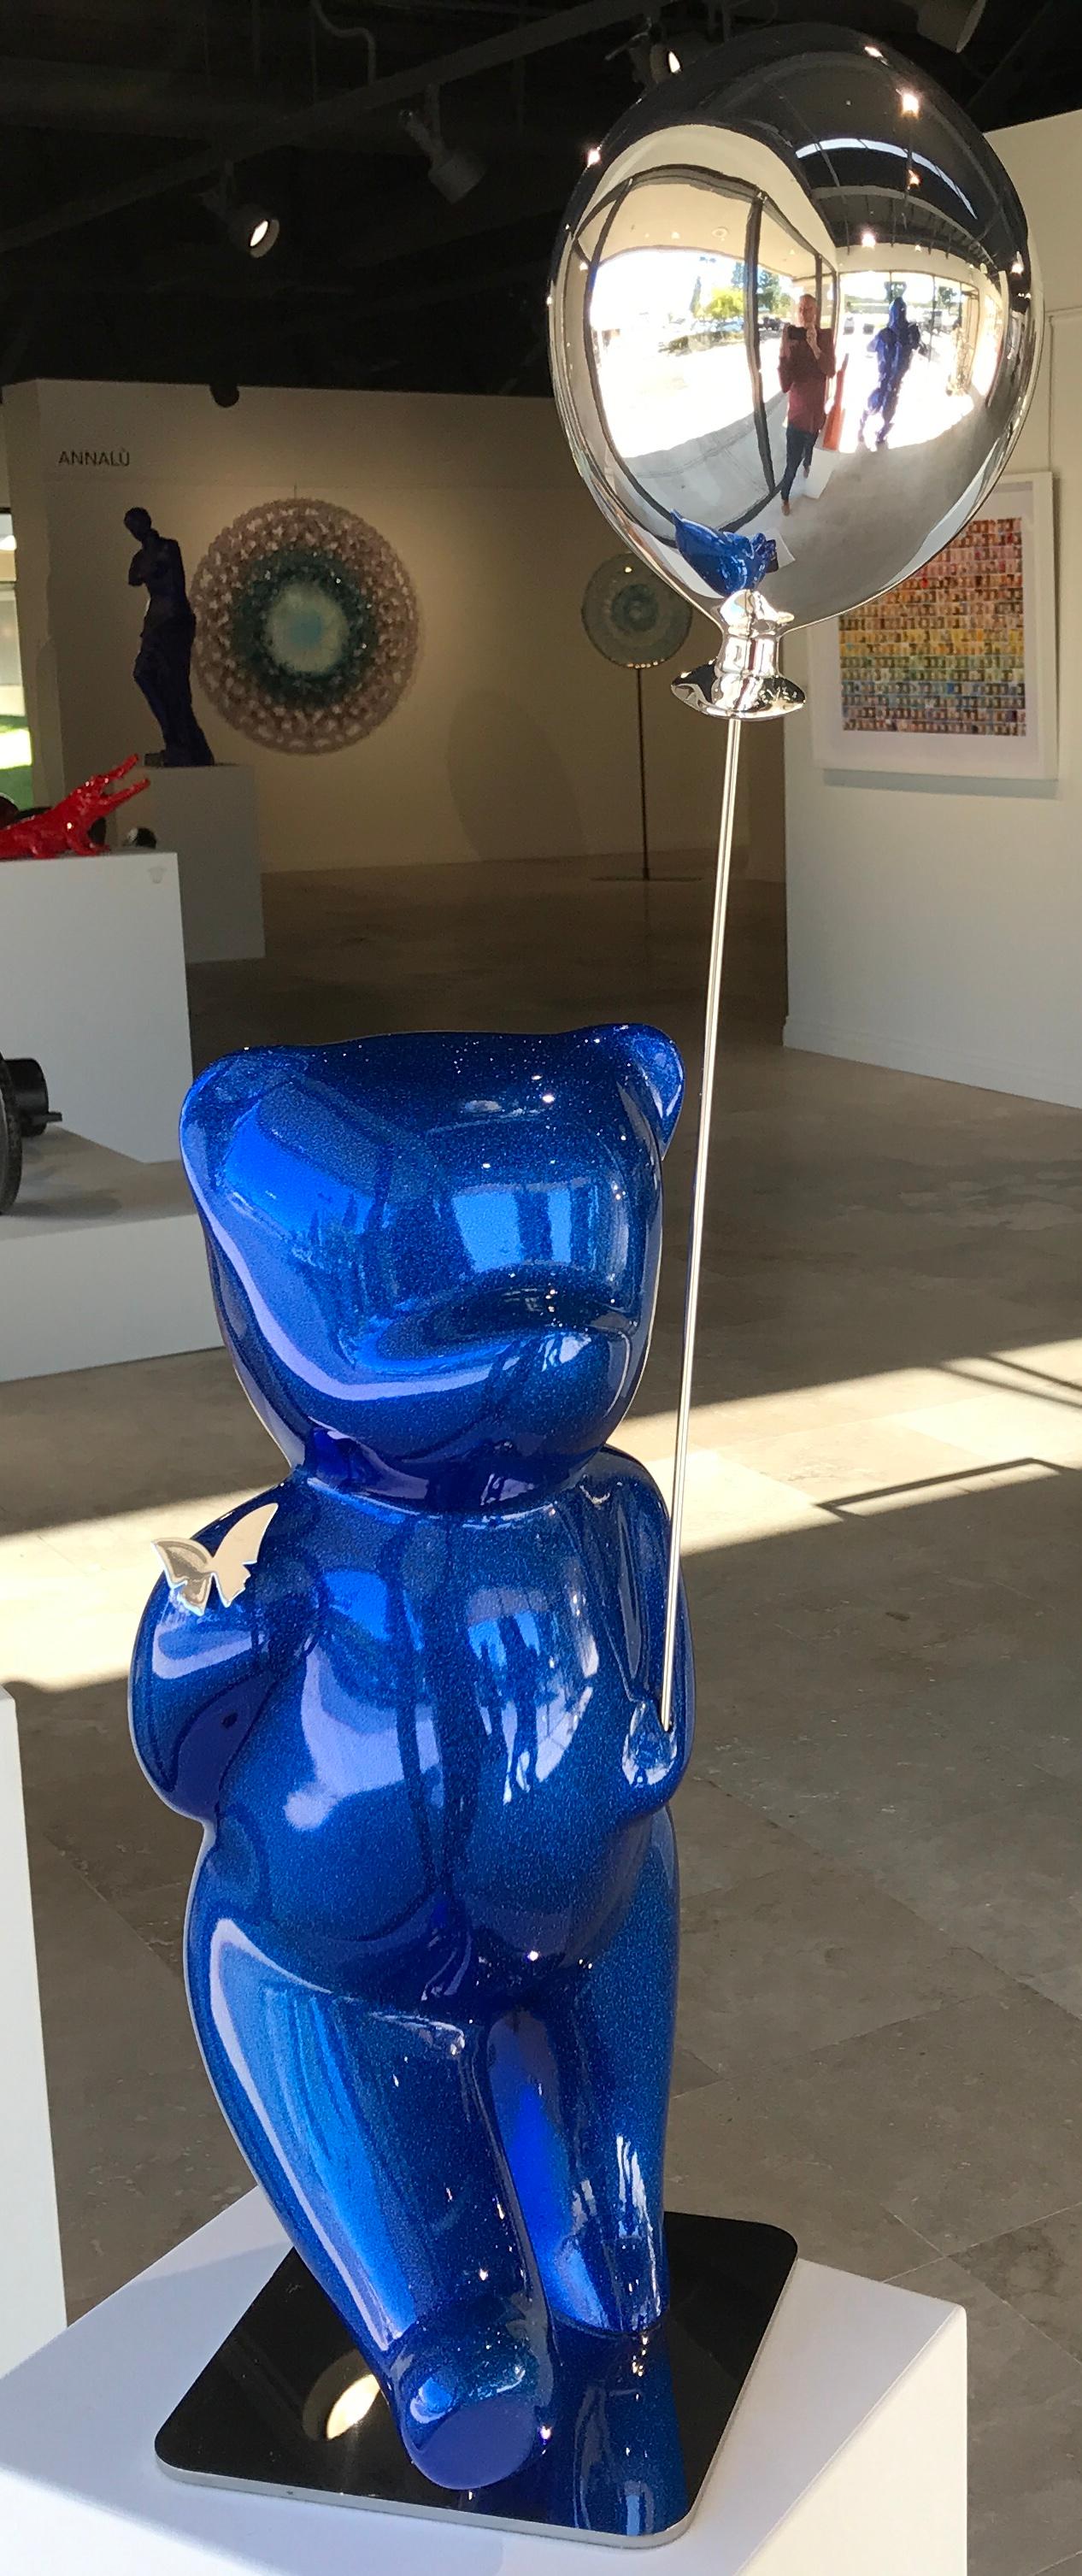 Cévé Figurative Sculpture - Walking Teddy - Sparkly Blue Glitter w/Silver Balloon